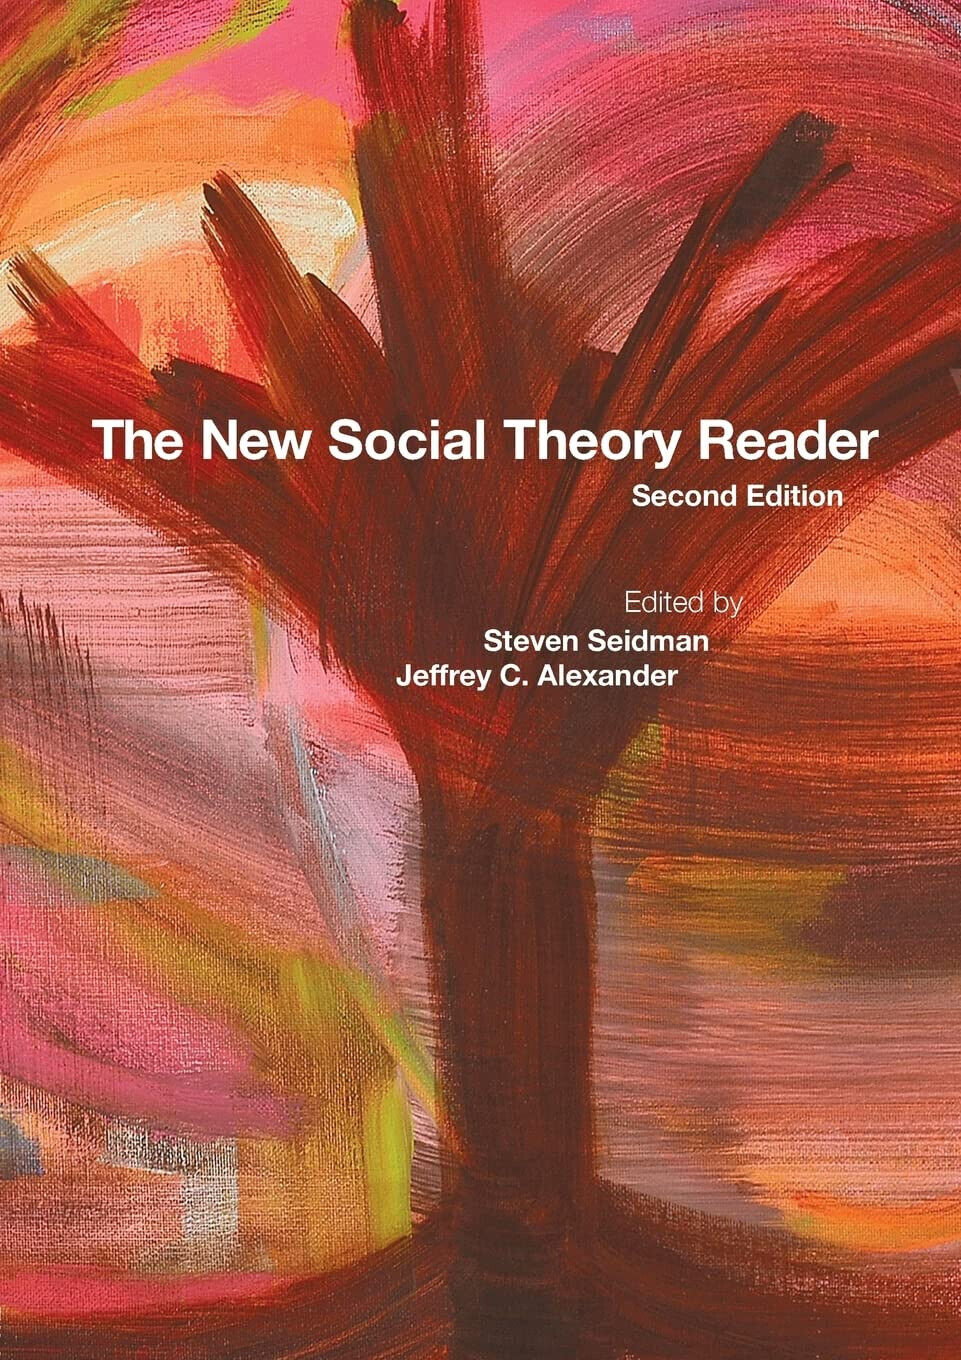 The New Social Theory Reader - Steven Seidman - Routledge, 2008